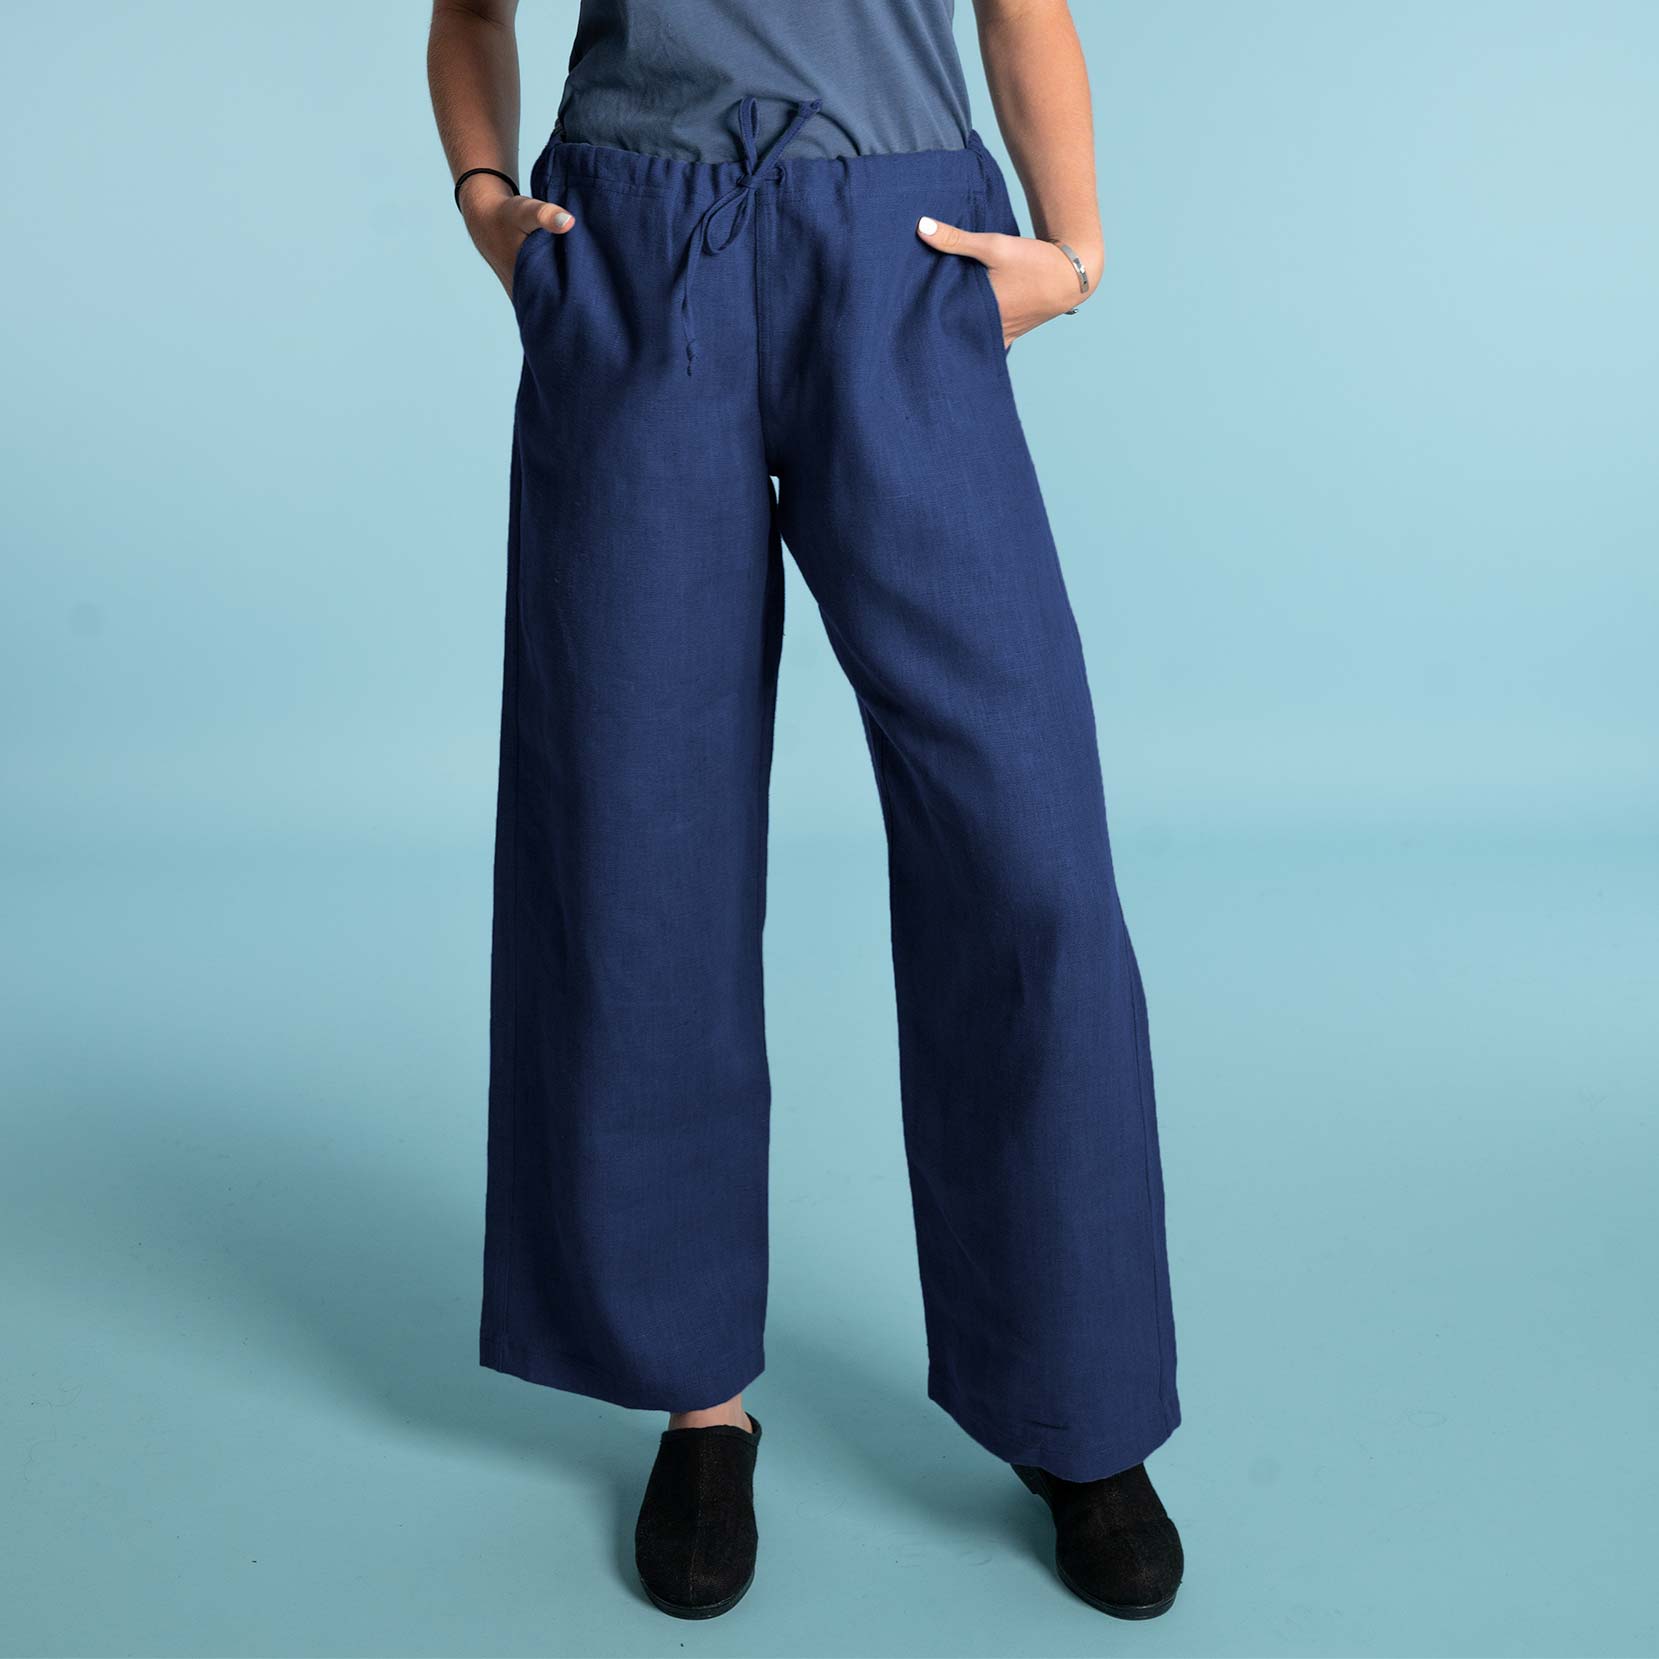 100% Organic Hemp Leggings Lounge Pants (Breathable; Non-Confining) –  Rawganique